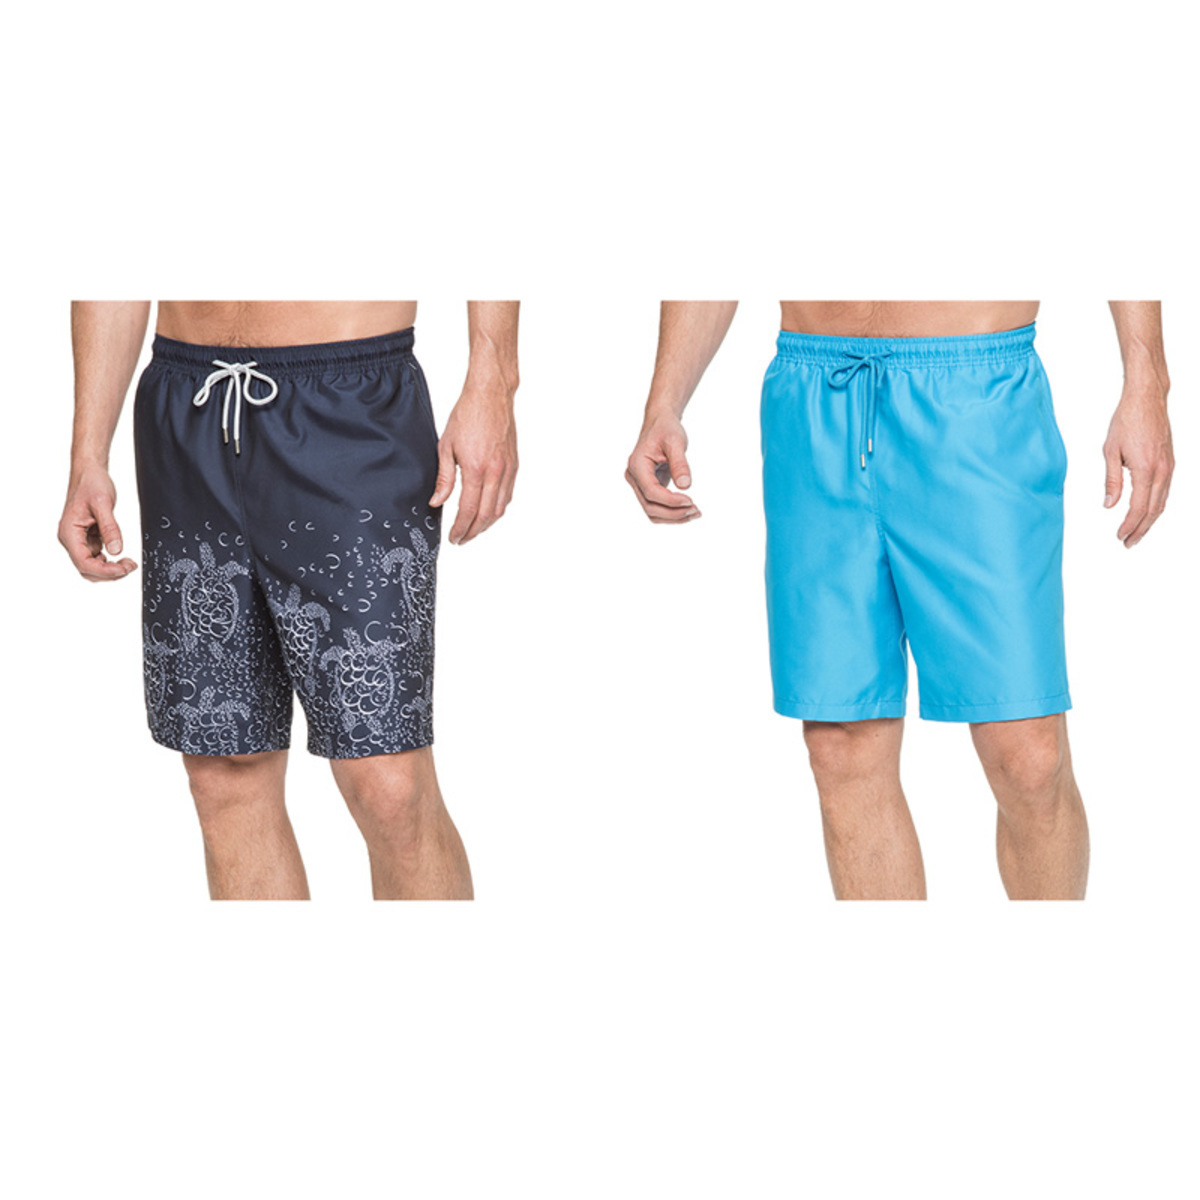 Kirkland Signature 2 Pack Men's Swim Shorts in 2 Style Packs and 4 Sizes